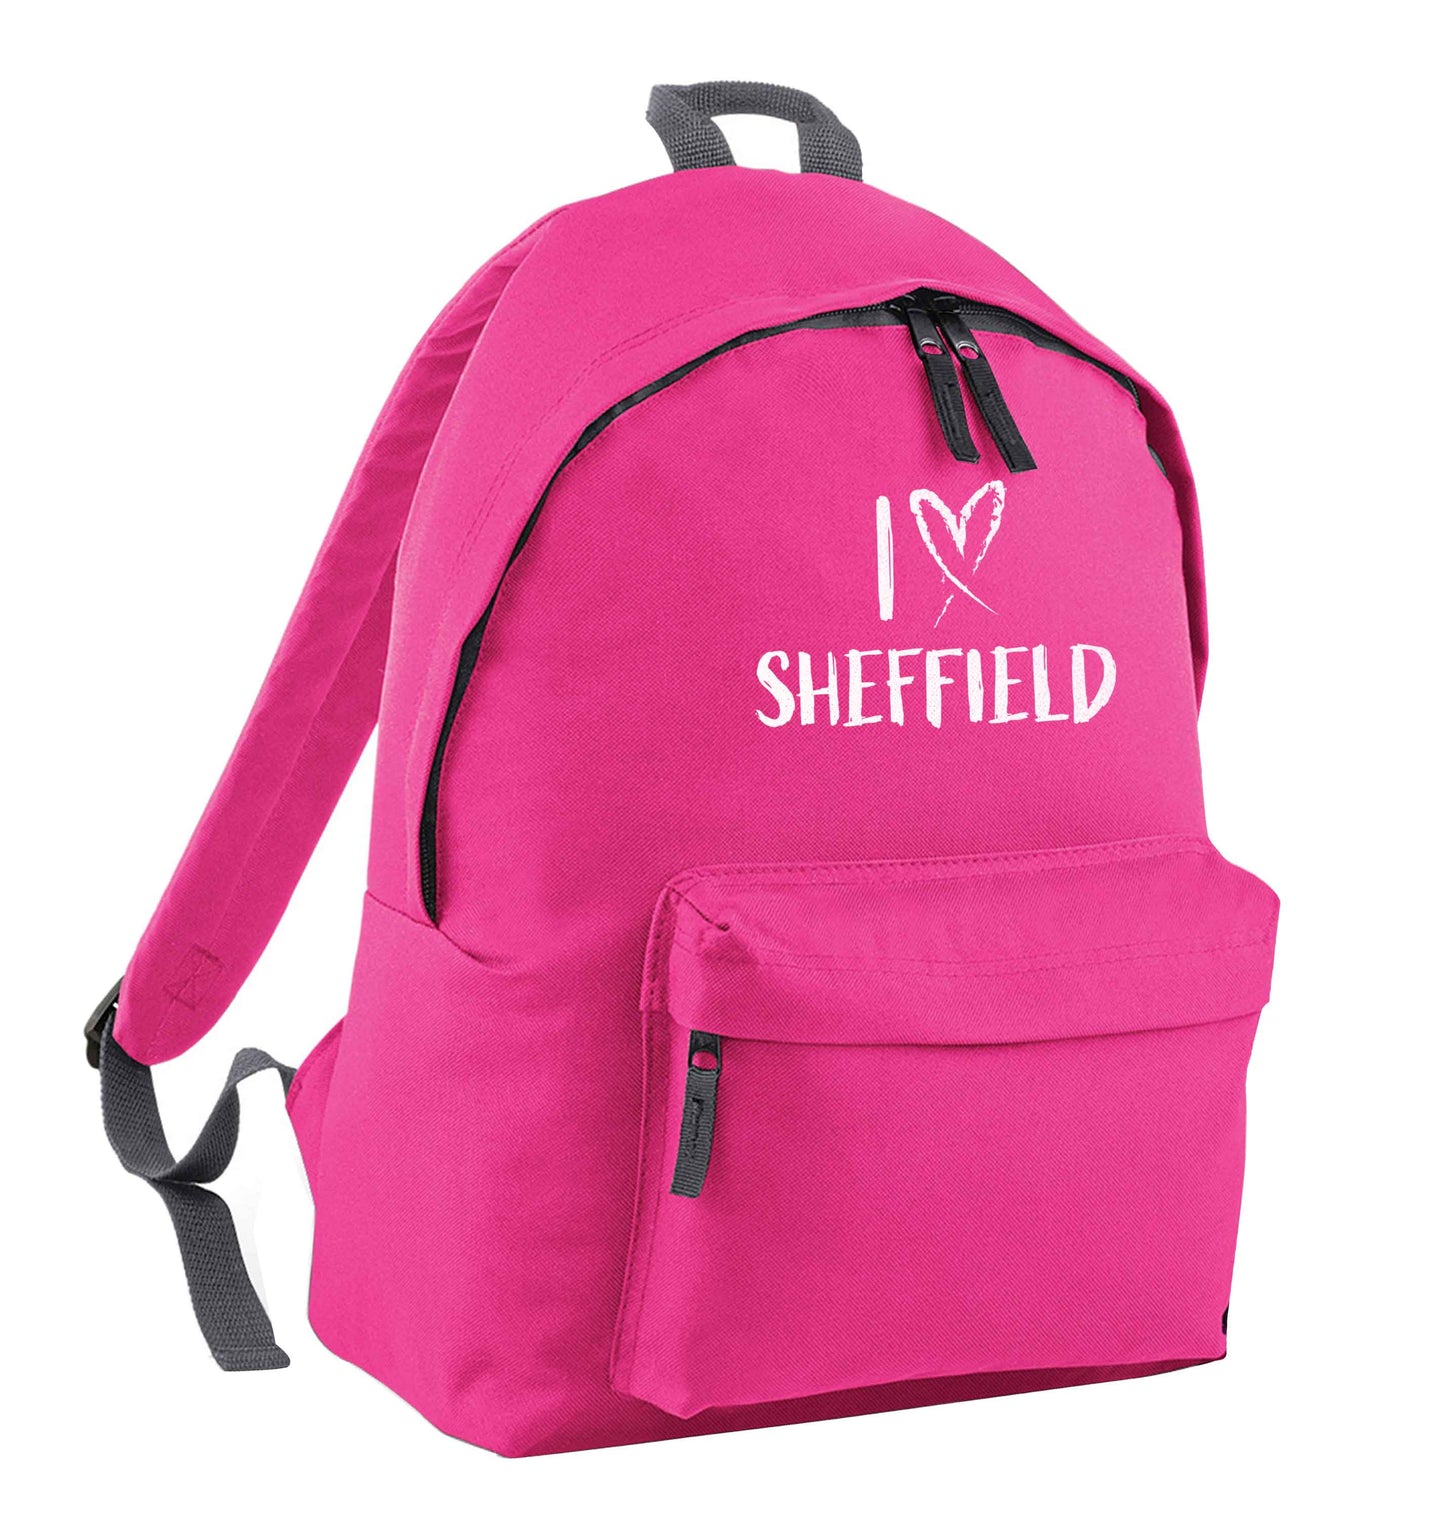 I love Sheffield pink adults backpack